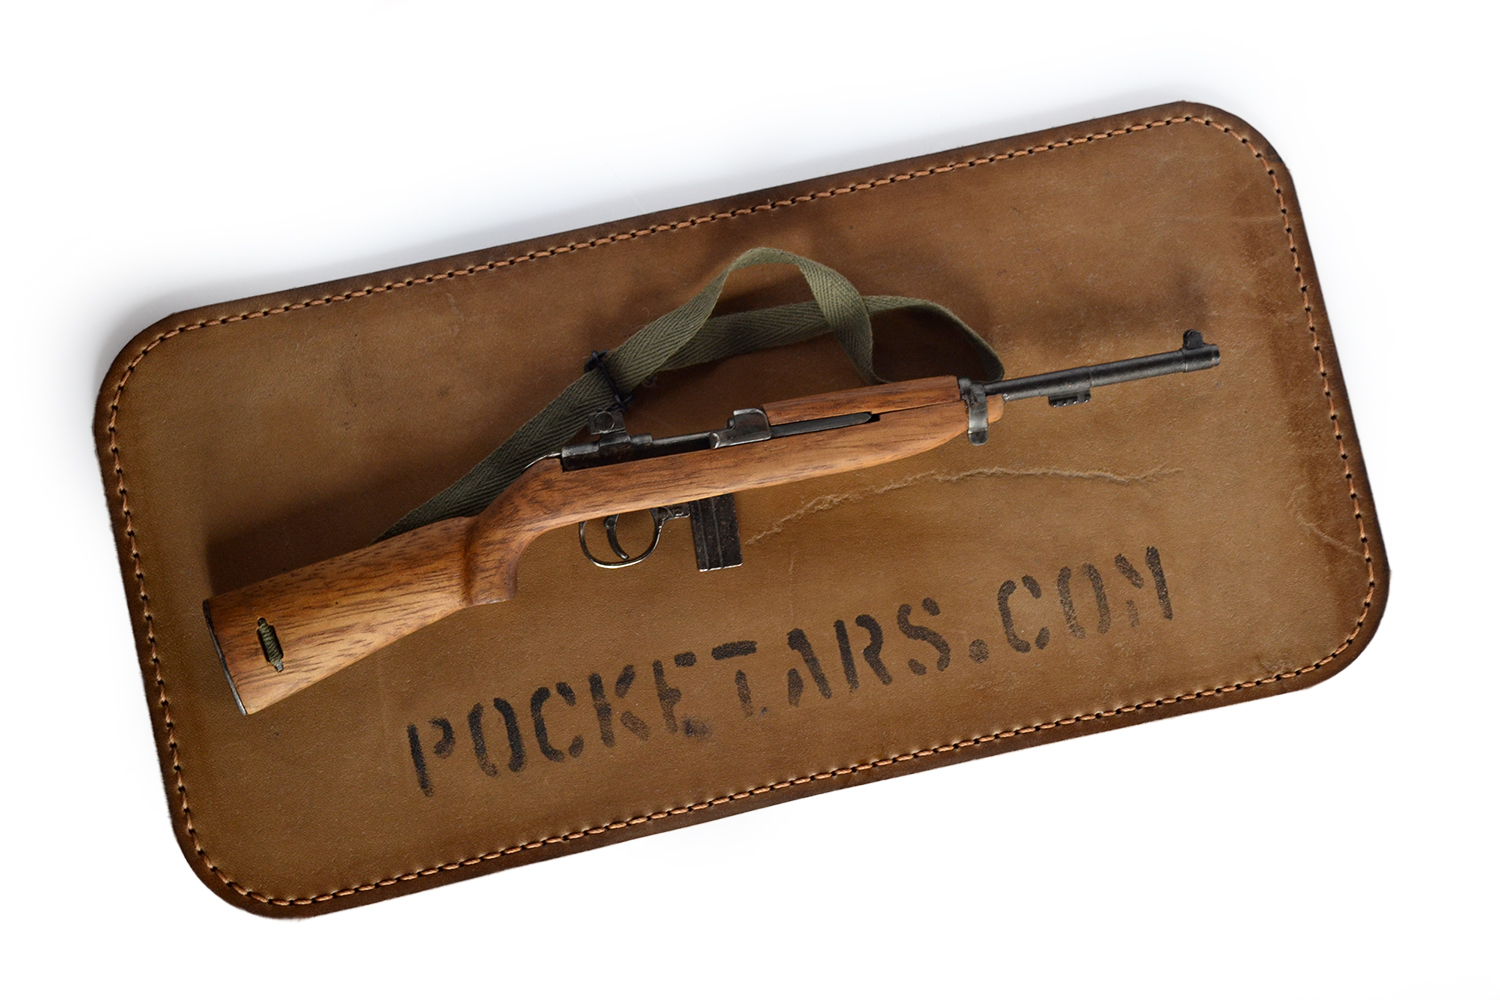 Model M1 Carbine made PocketARS